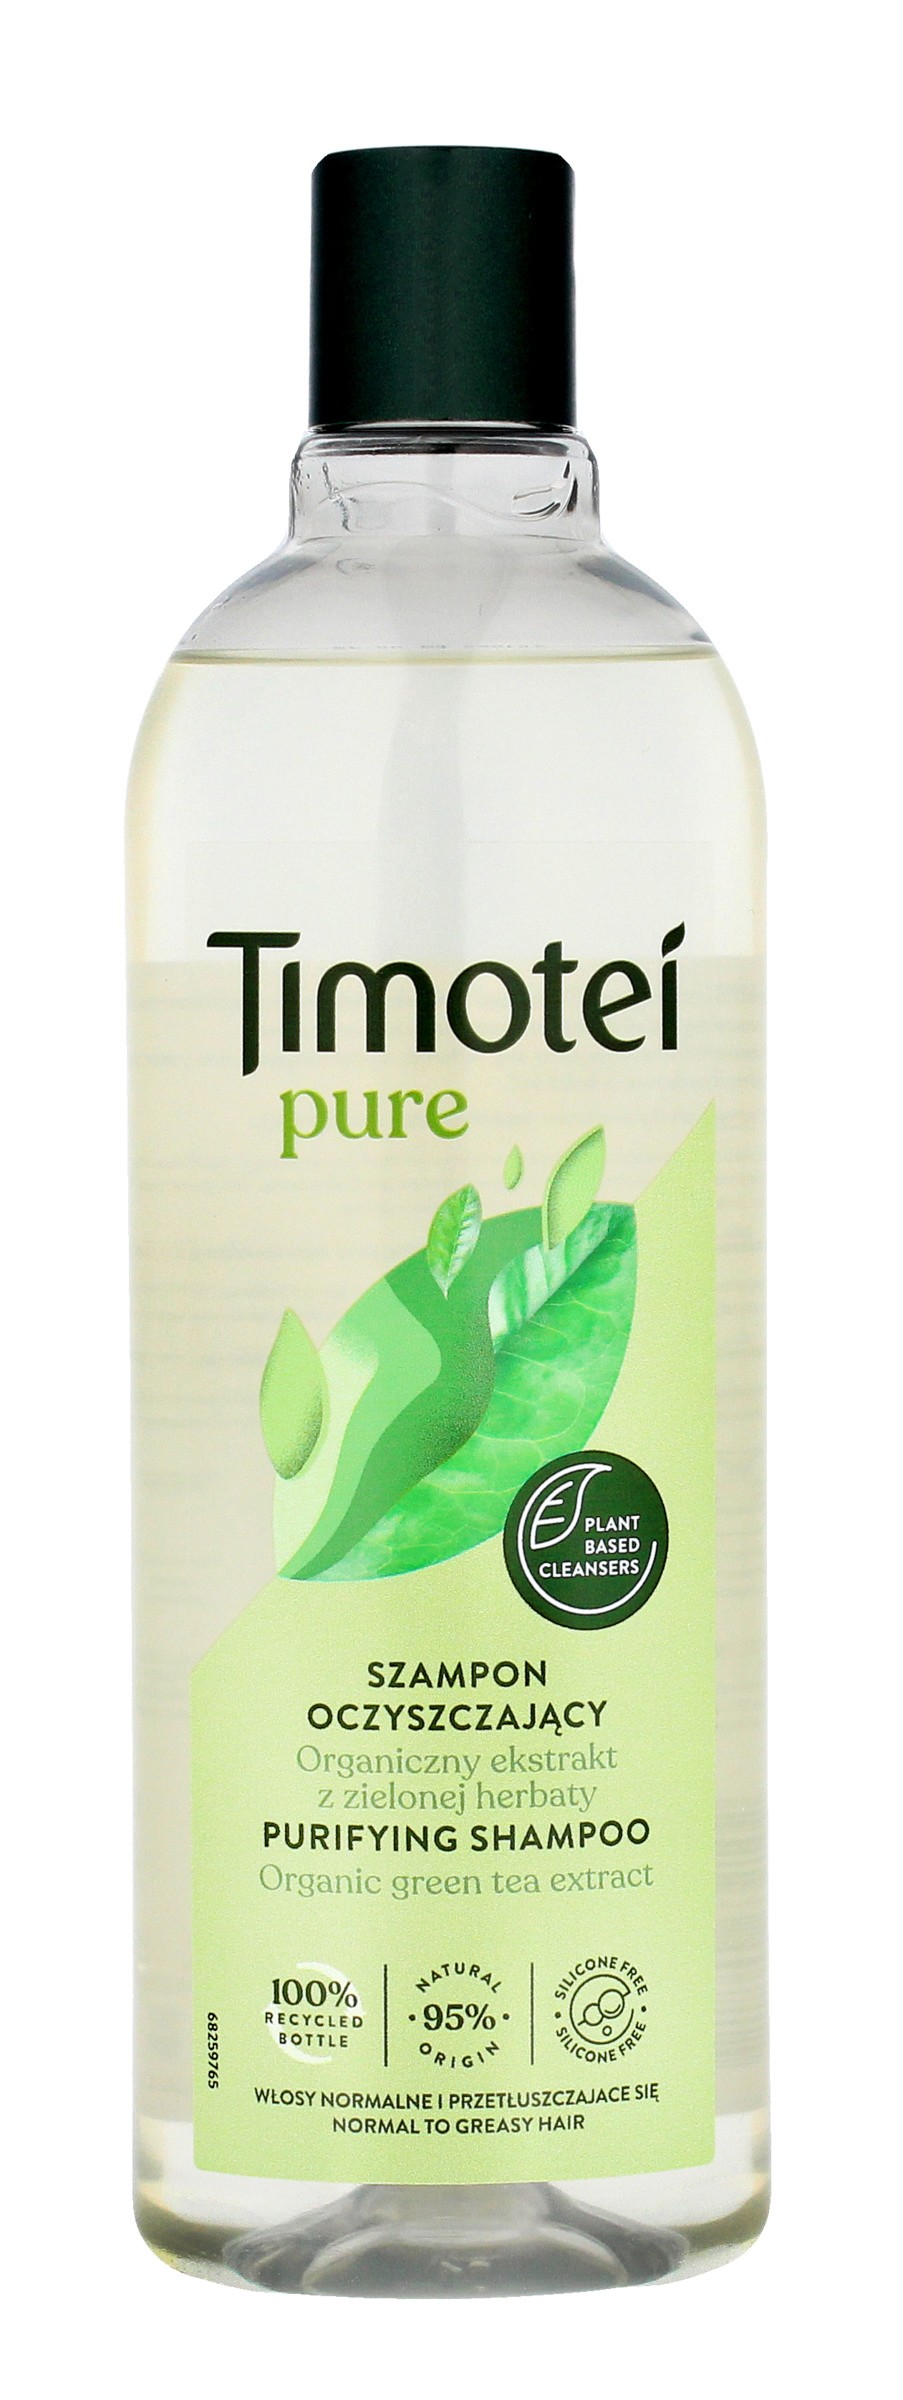 2018 timotei szampon polska firma